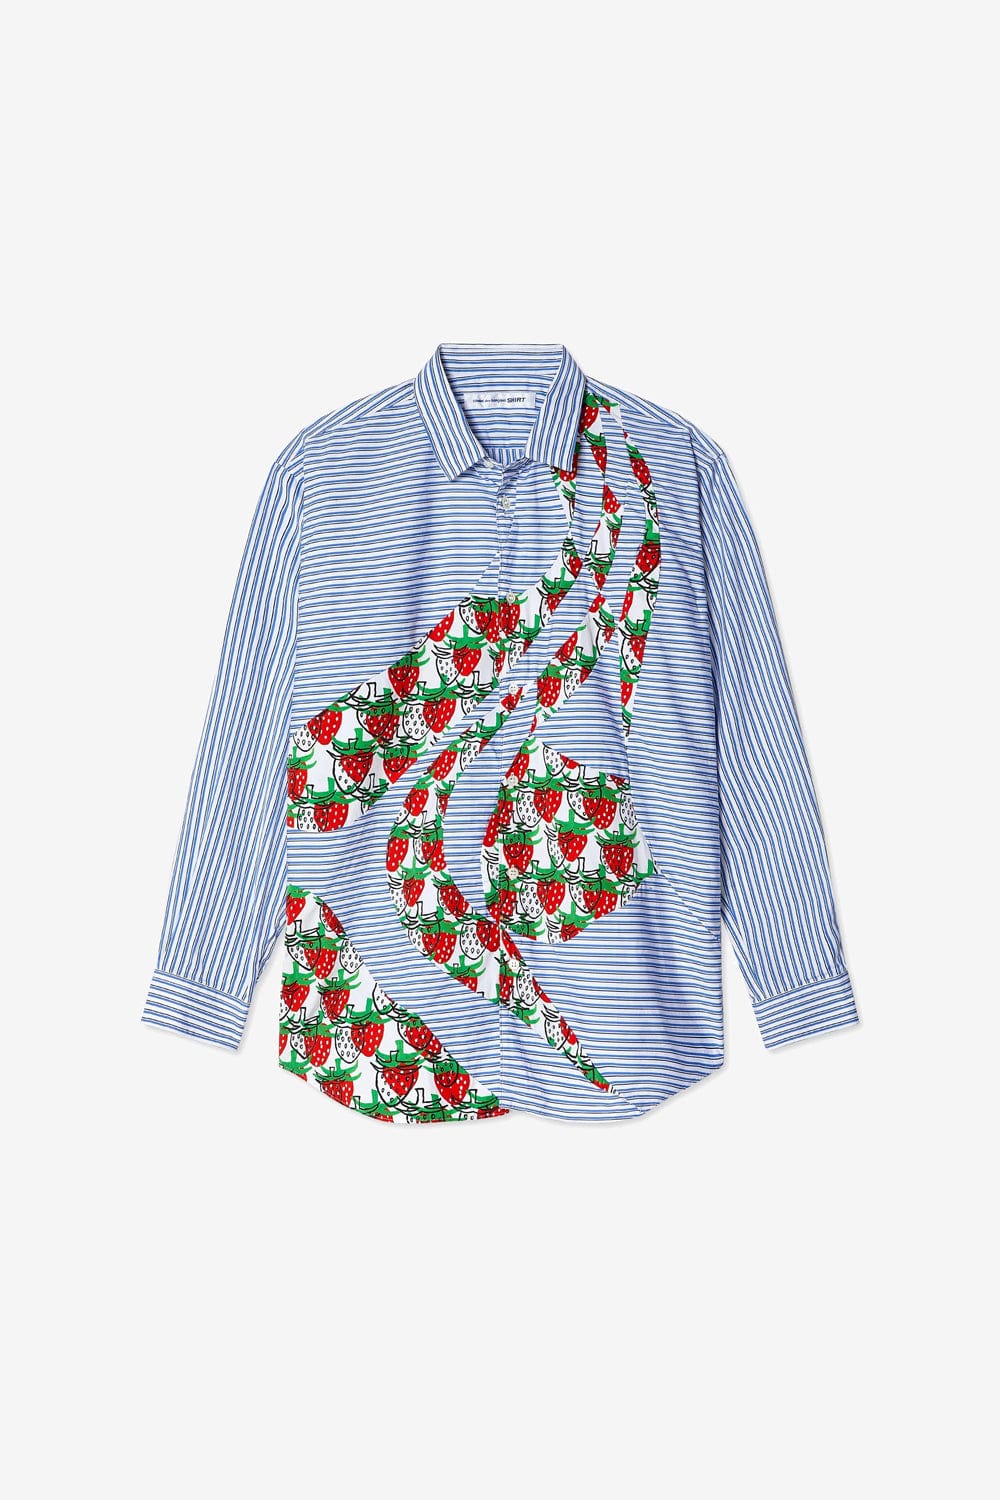 COMME des GARCONS SHIRT B005 Brett Westfall Stripe Large Strawberry Patchwork Shirt (Stripes/Print)